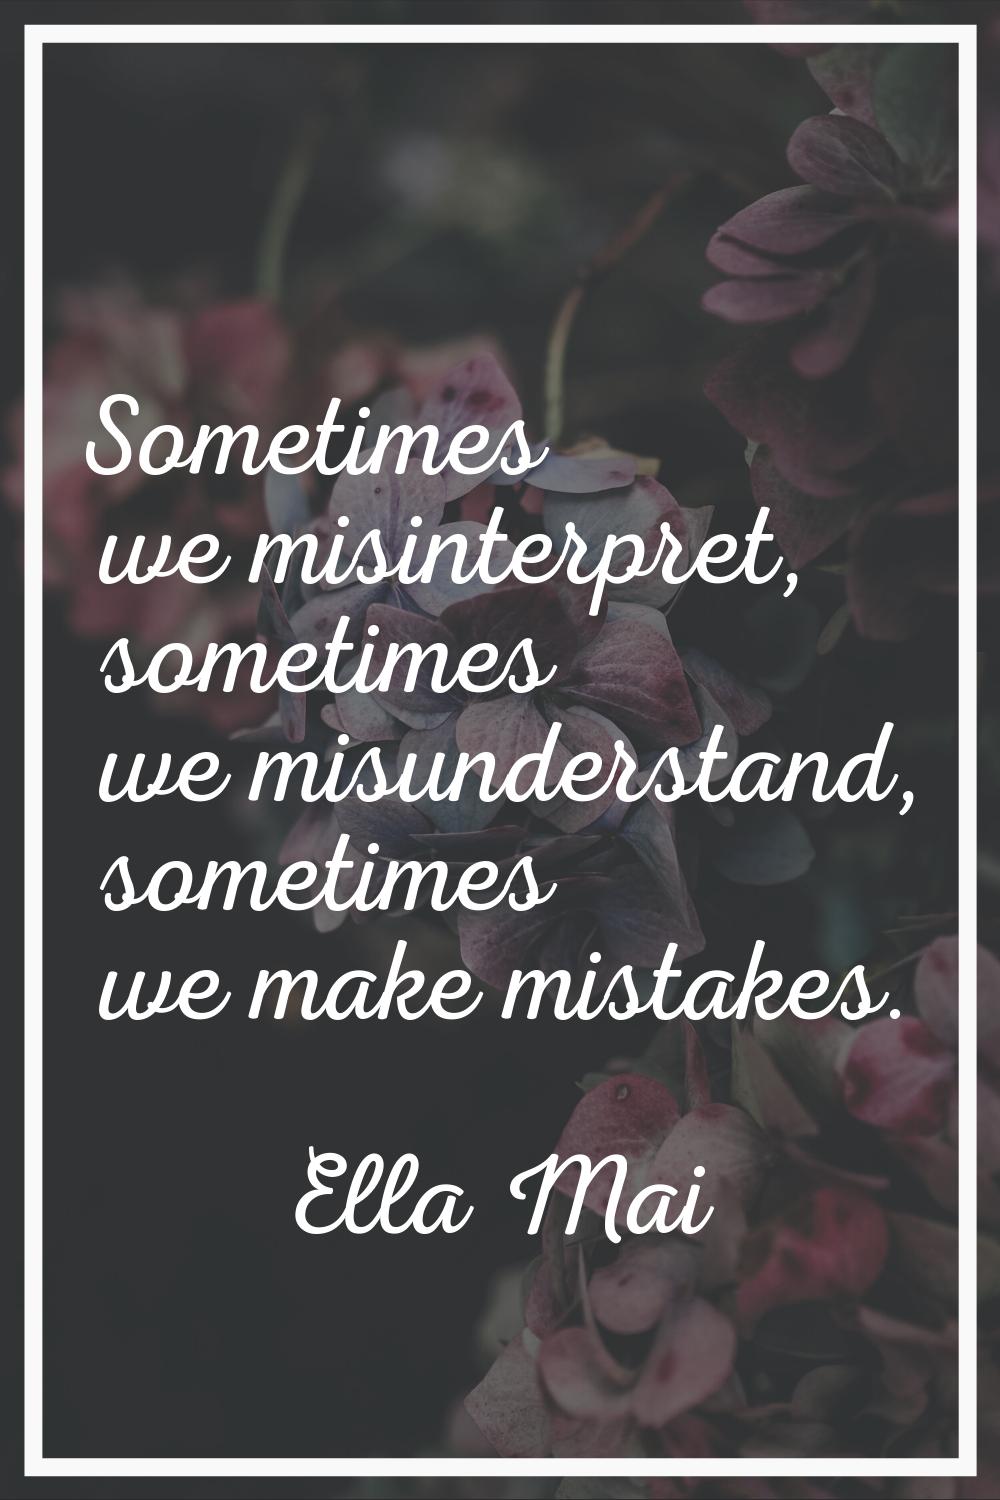 Sometimes we misinterpret, sometimes we misunderstand, sometimes we make mistakes.